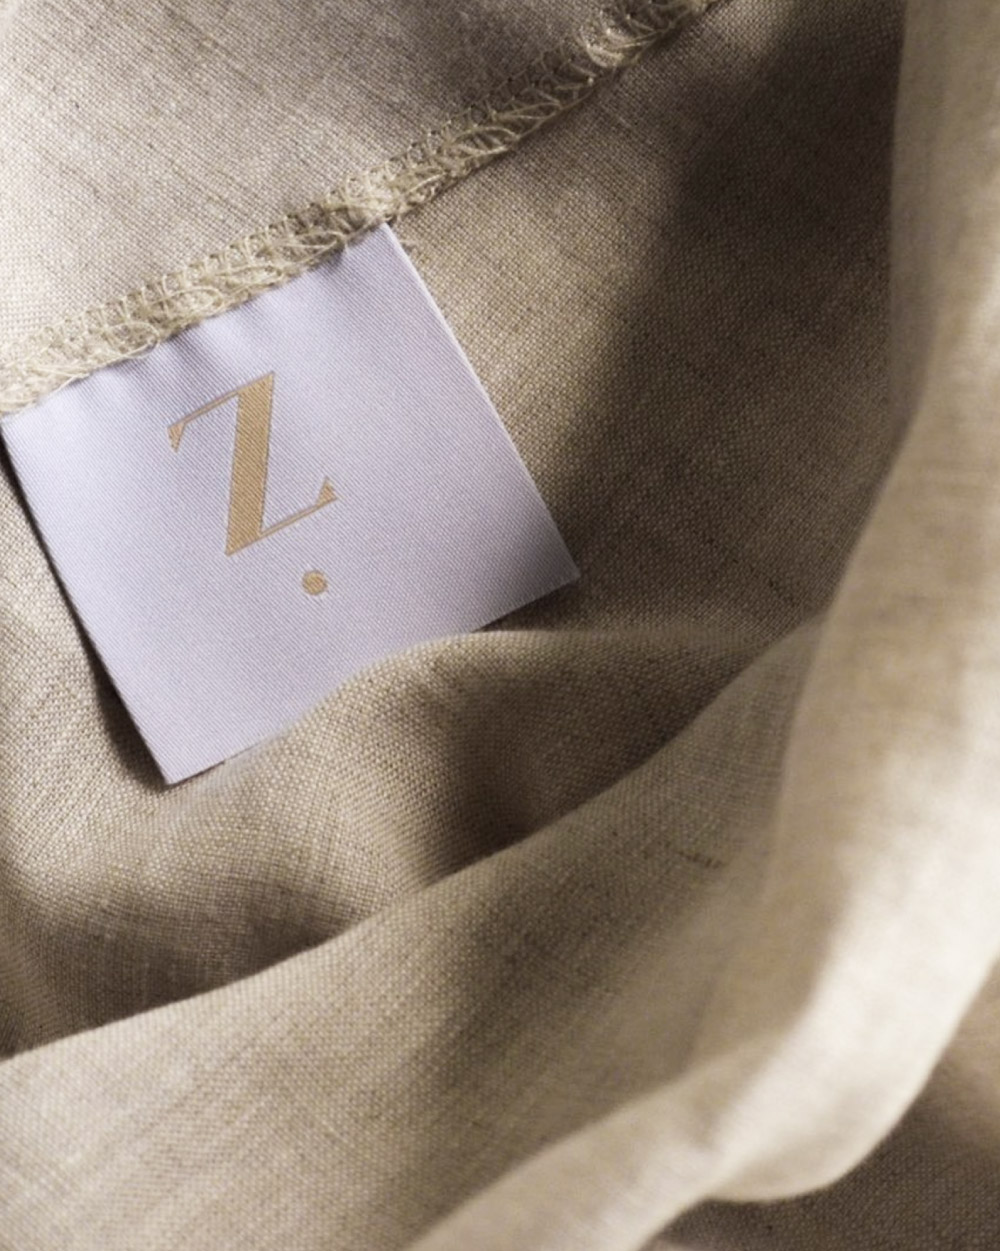 Z stitch in label design